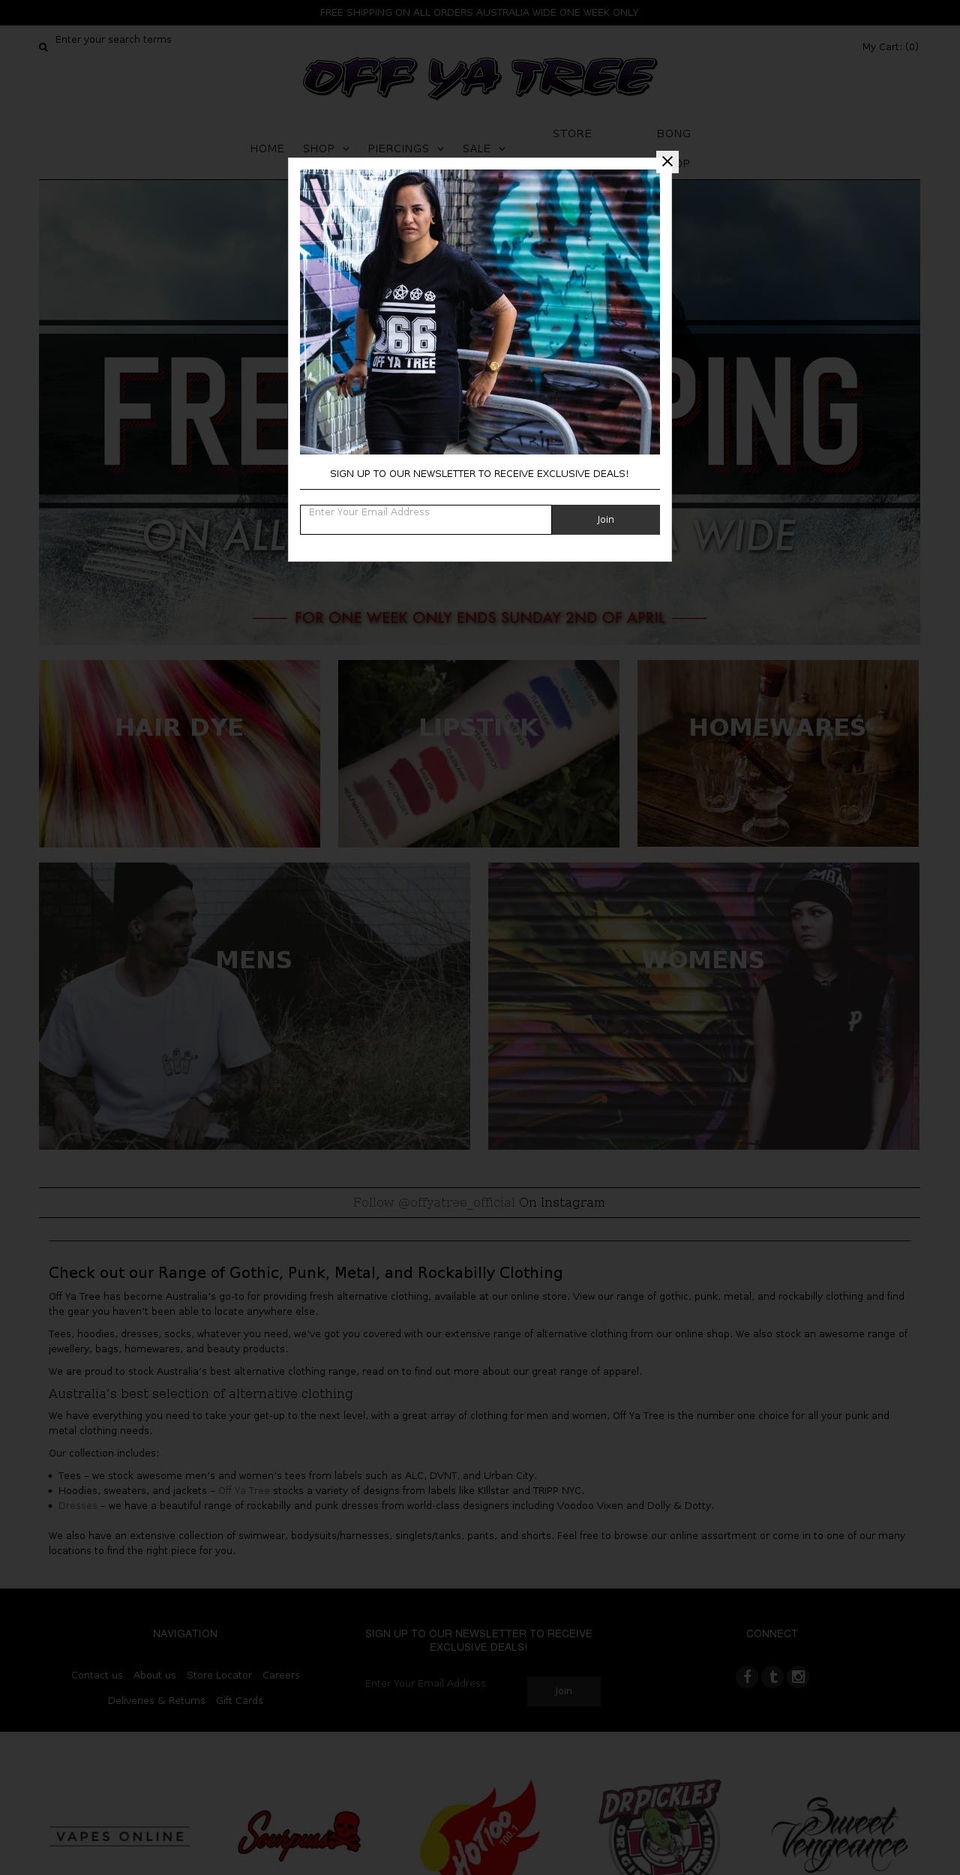 Megantic - V September Promo Update Shopify theme site example offyatree.com.au